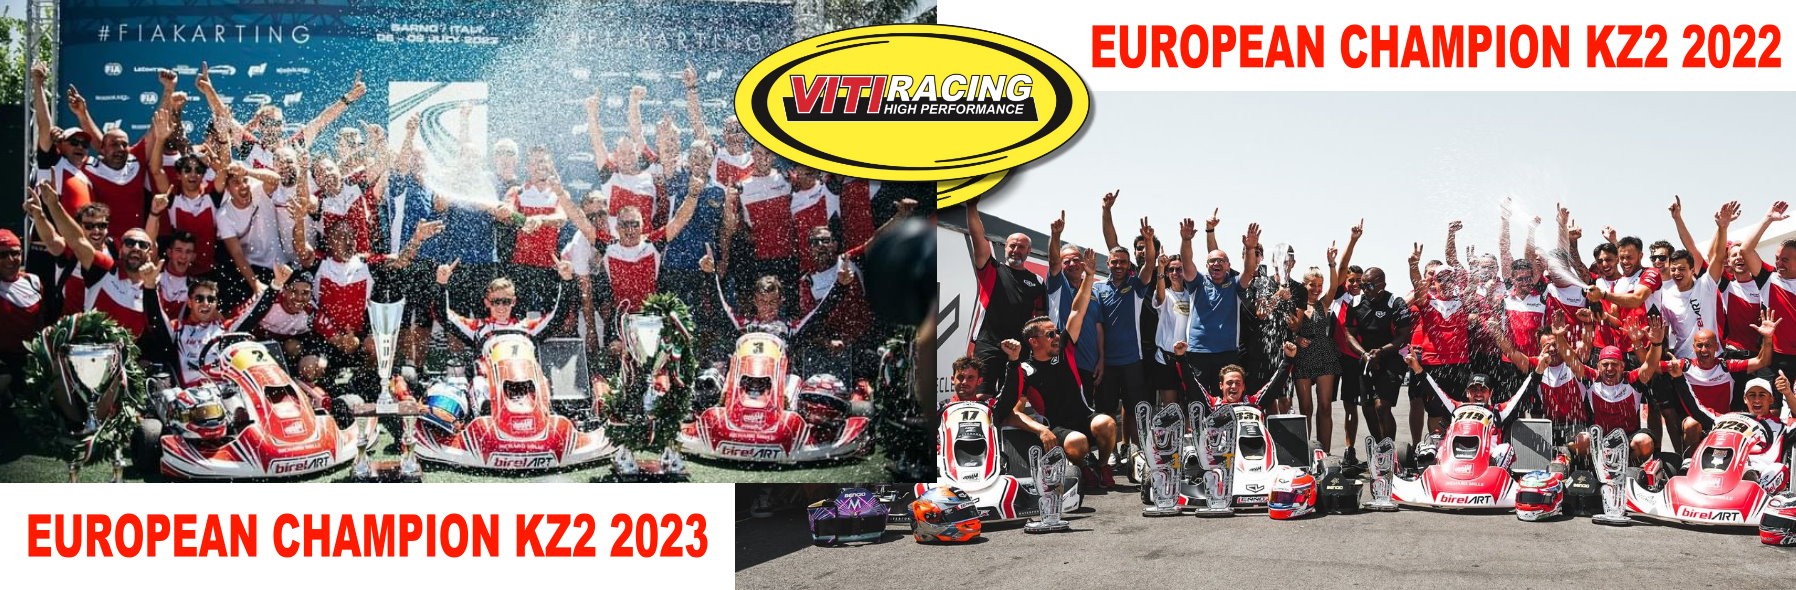 VITI RACING GROUP EUROPEAN CHAMPION KZ2 2022 2023